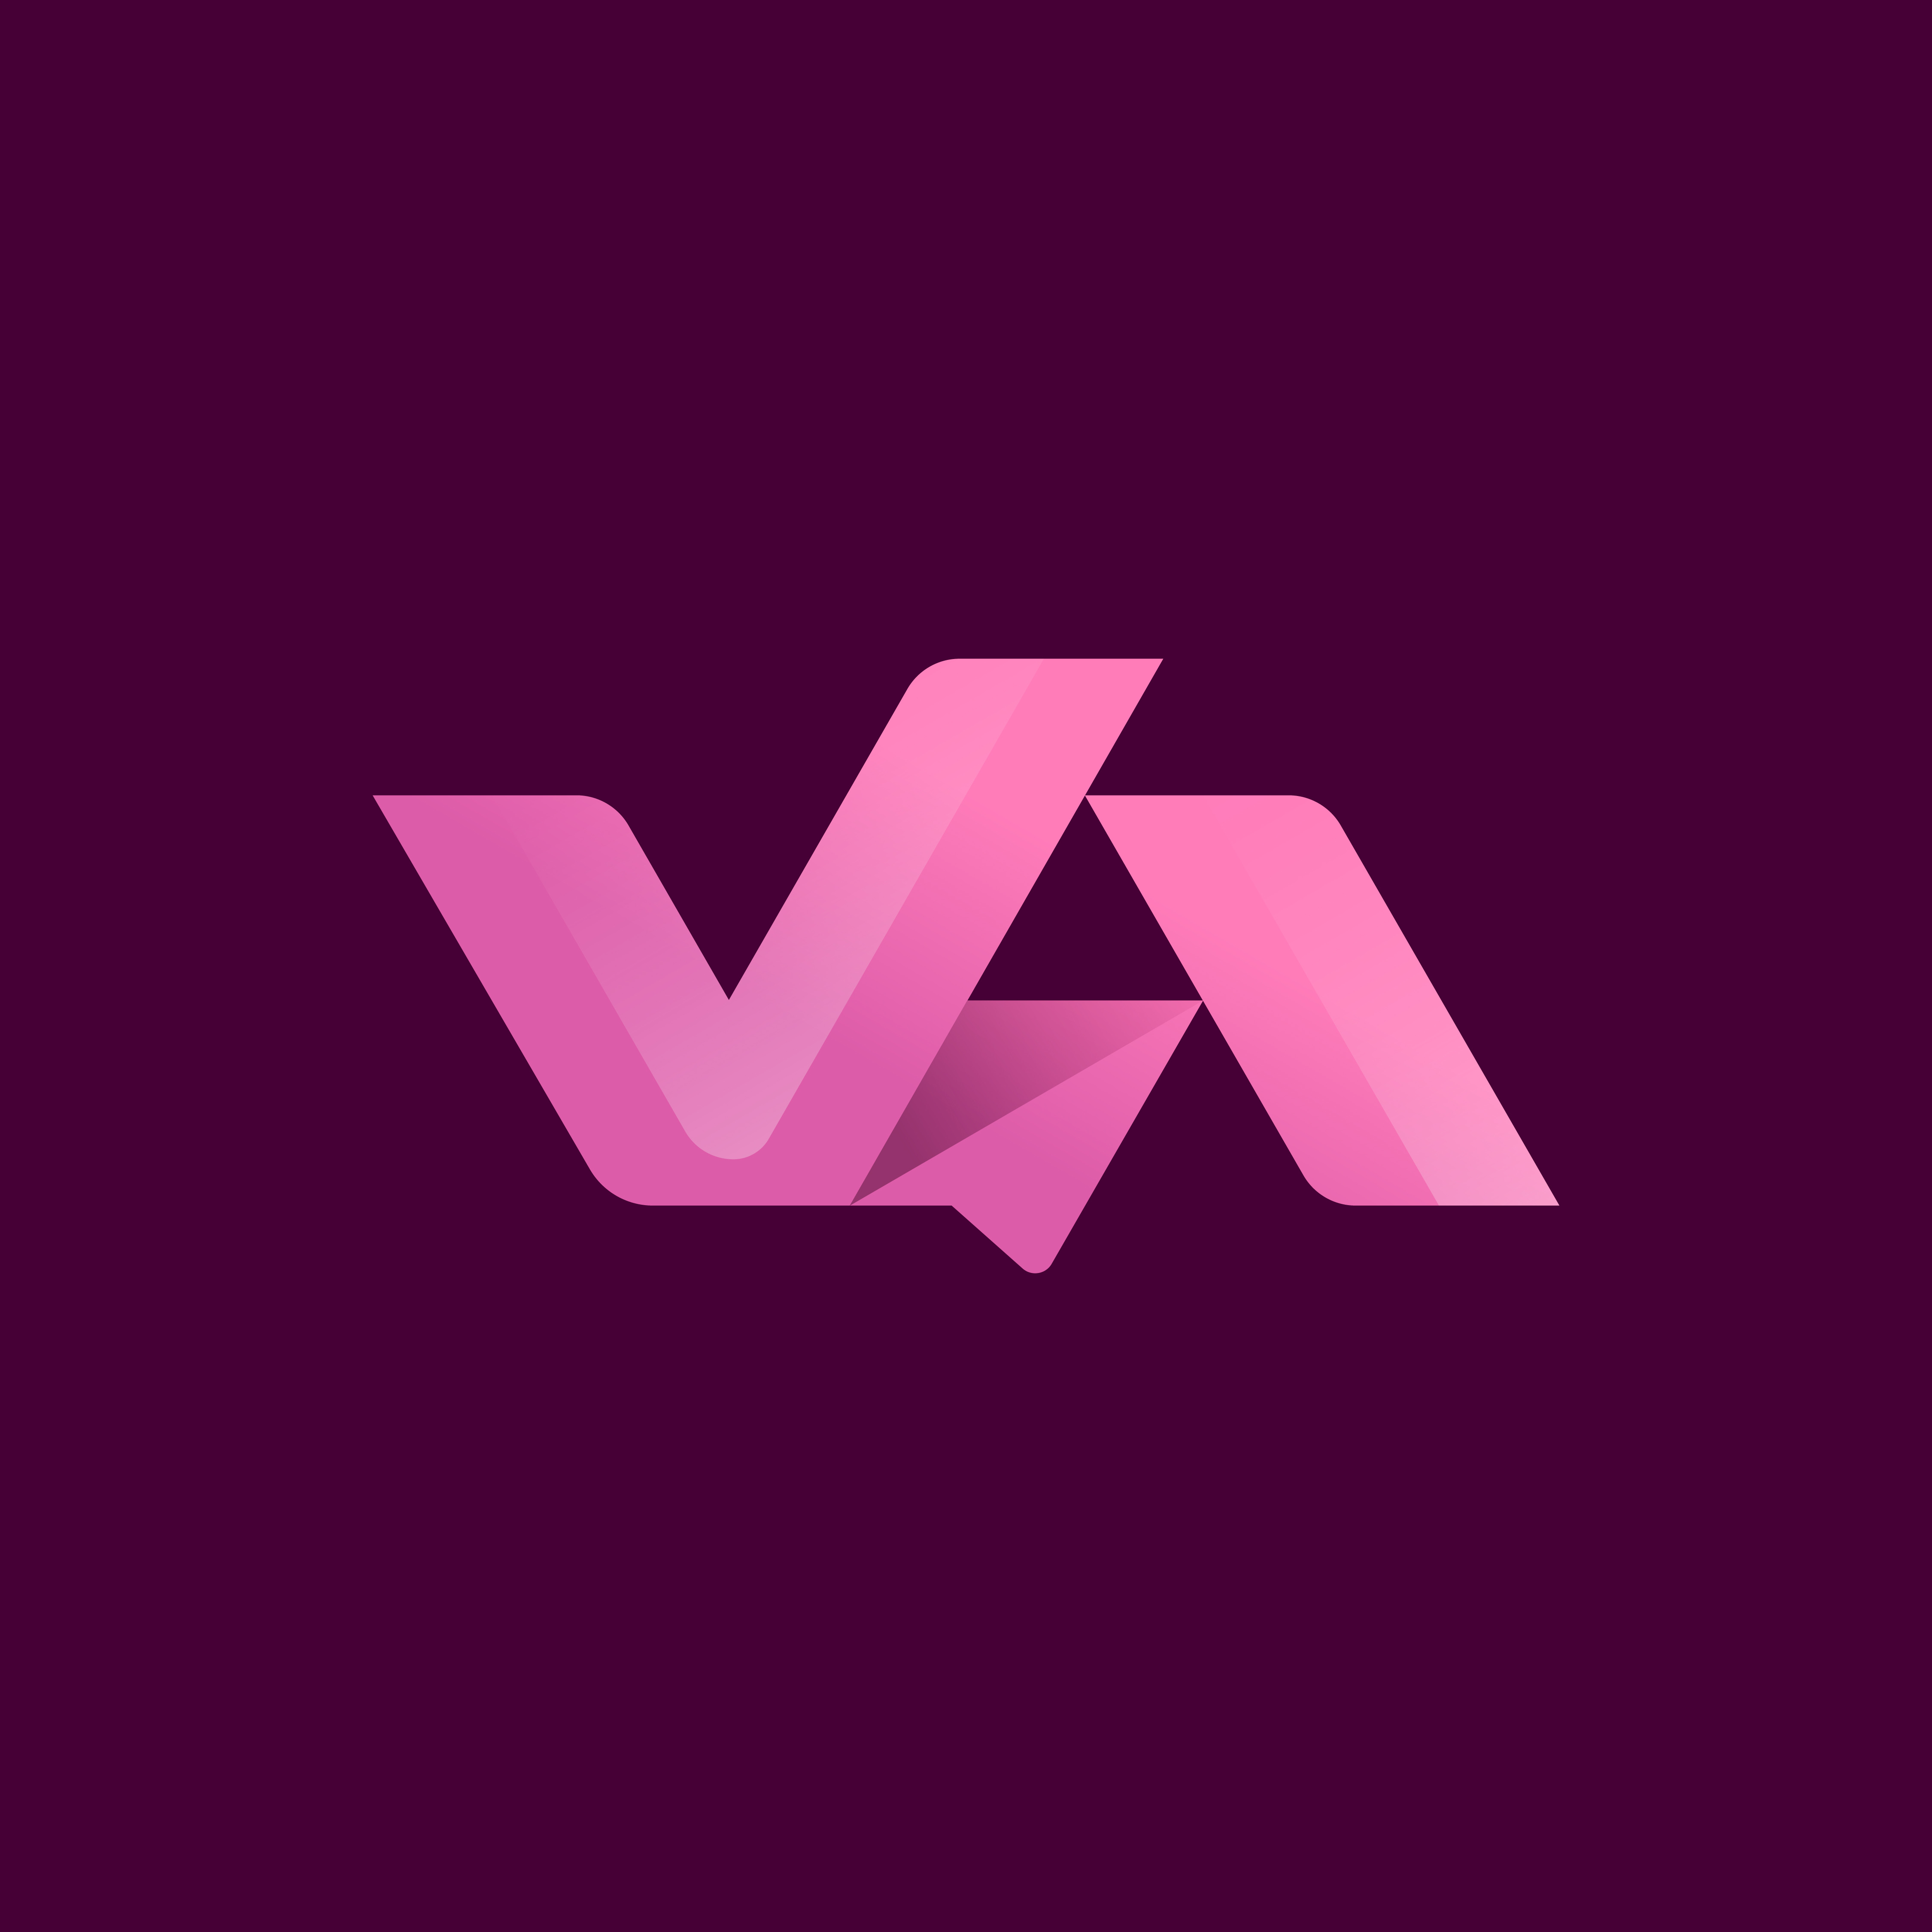 VA Agency logo